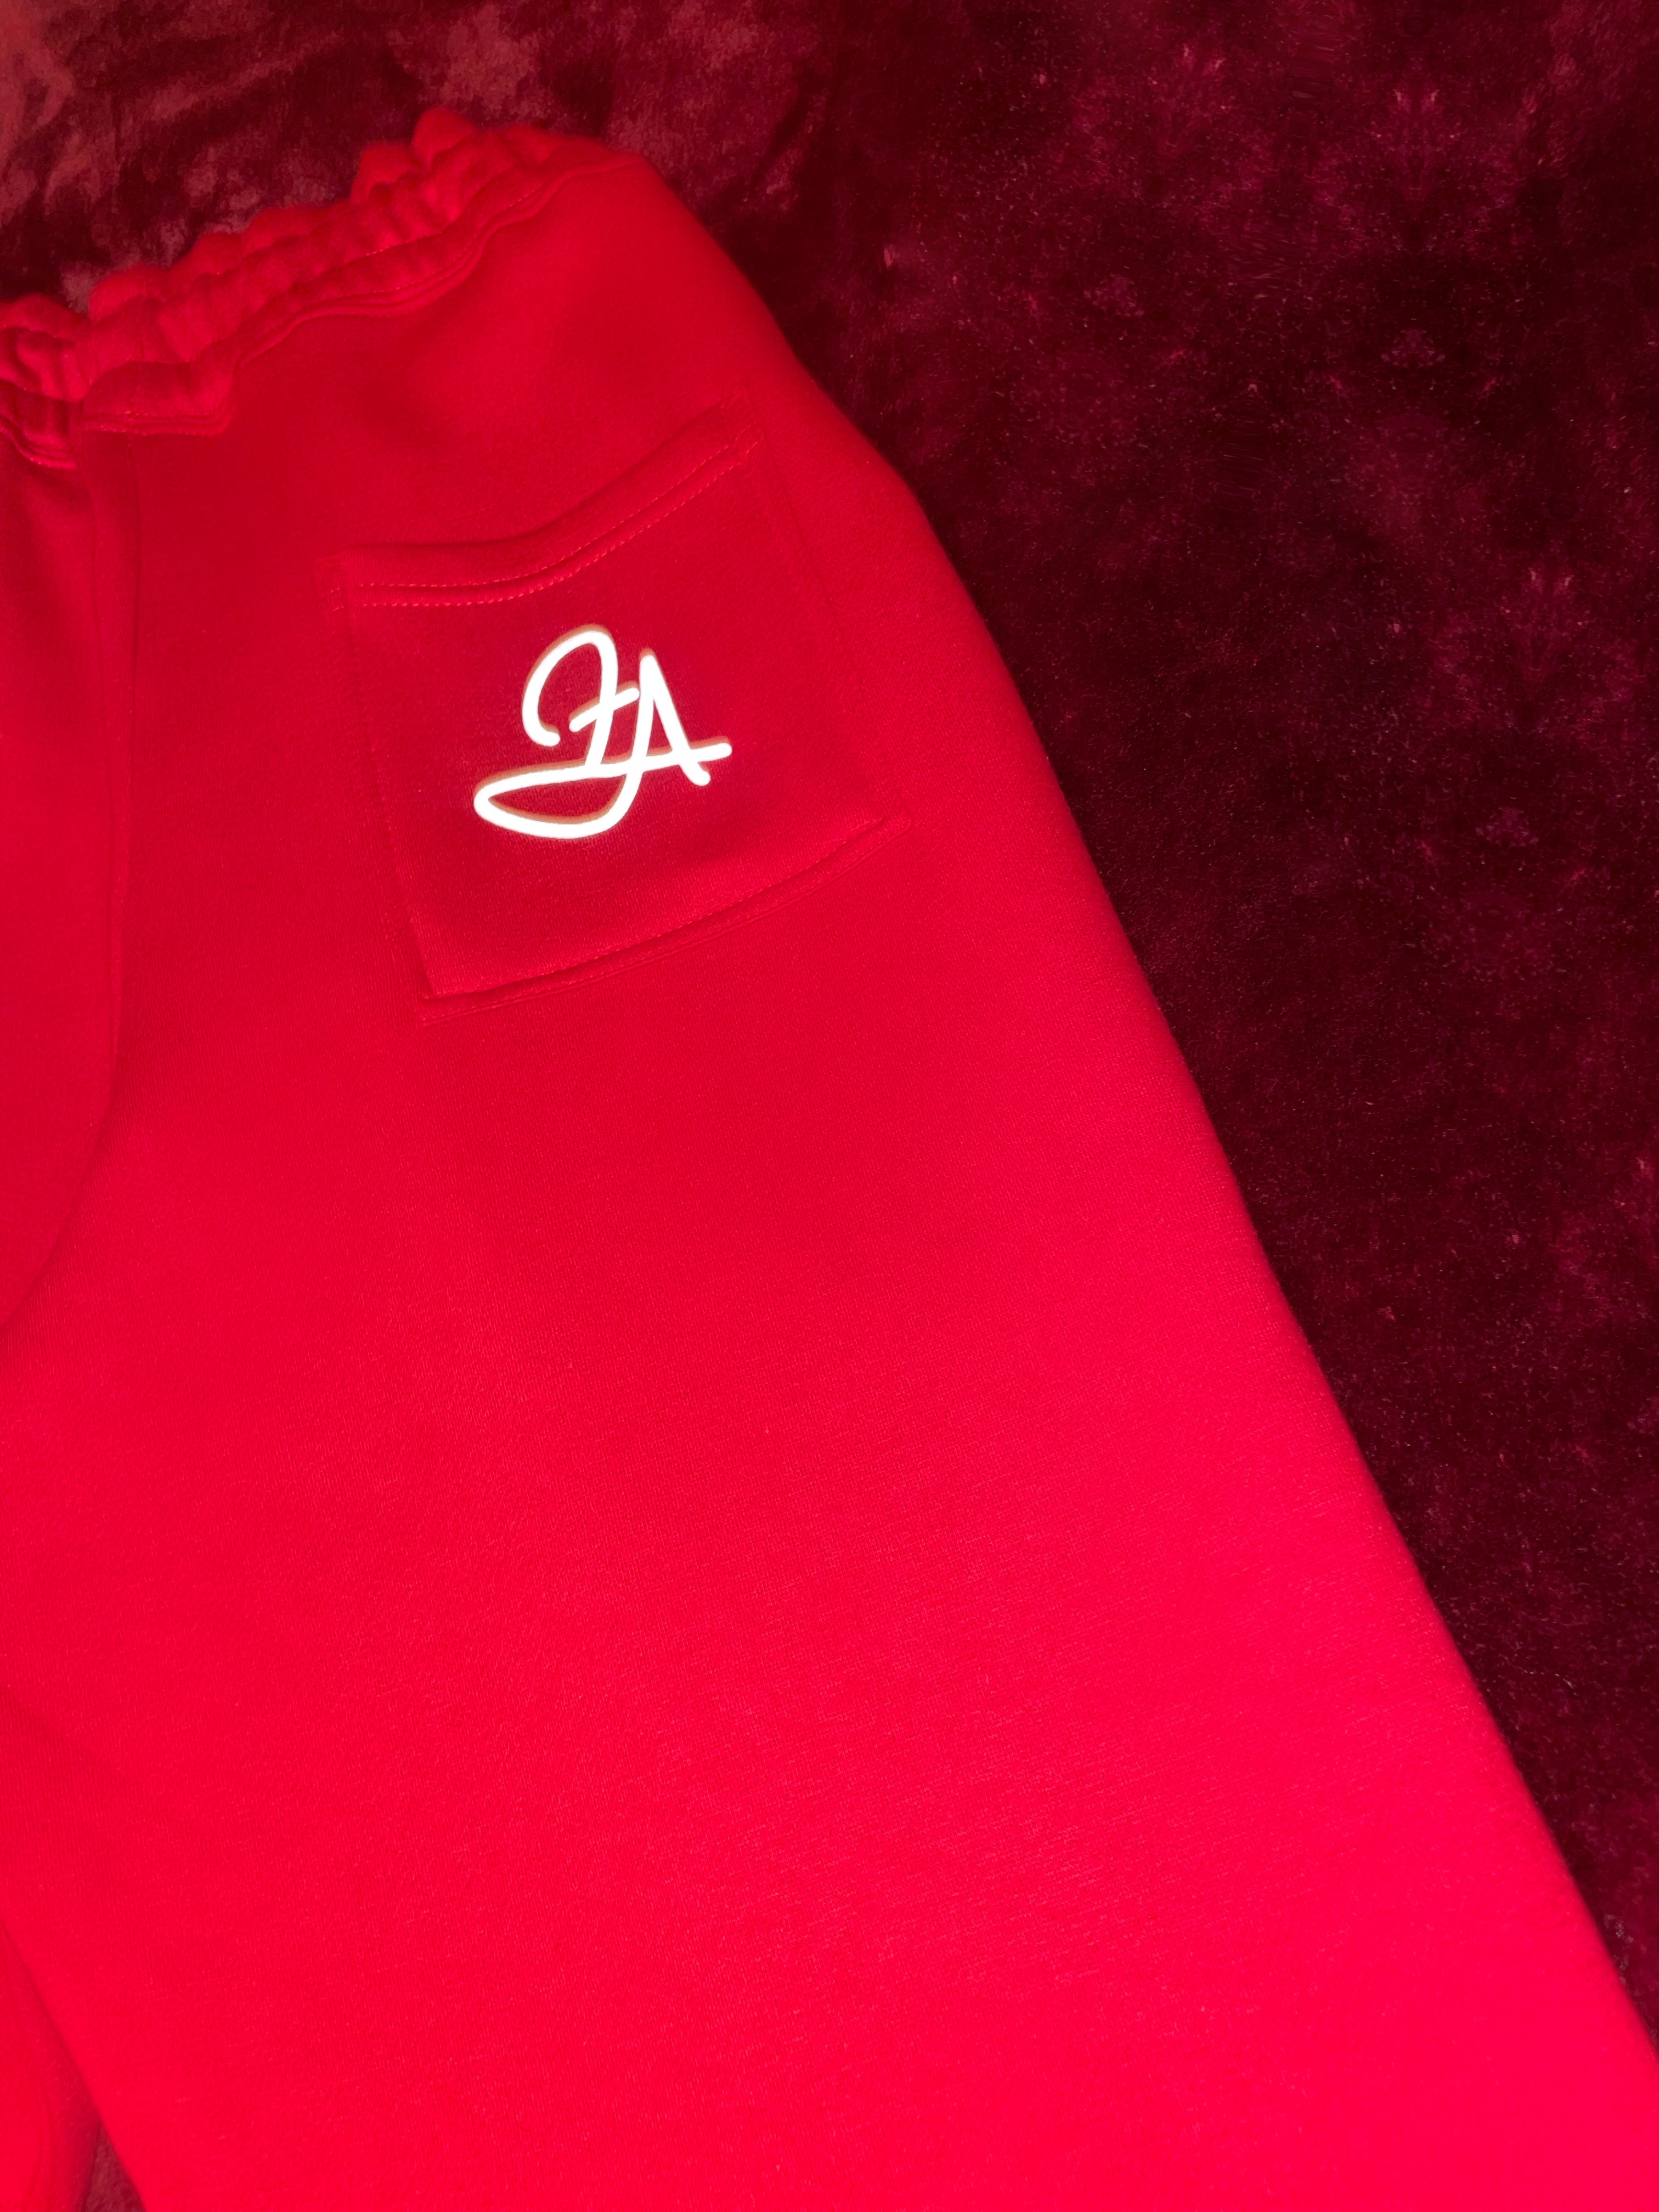 Fallon Aurielle Unisex Signature Scorpio Scorpion Logo & Name Zodiac Jacket Jogging Set (Red & White)